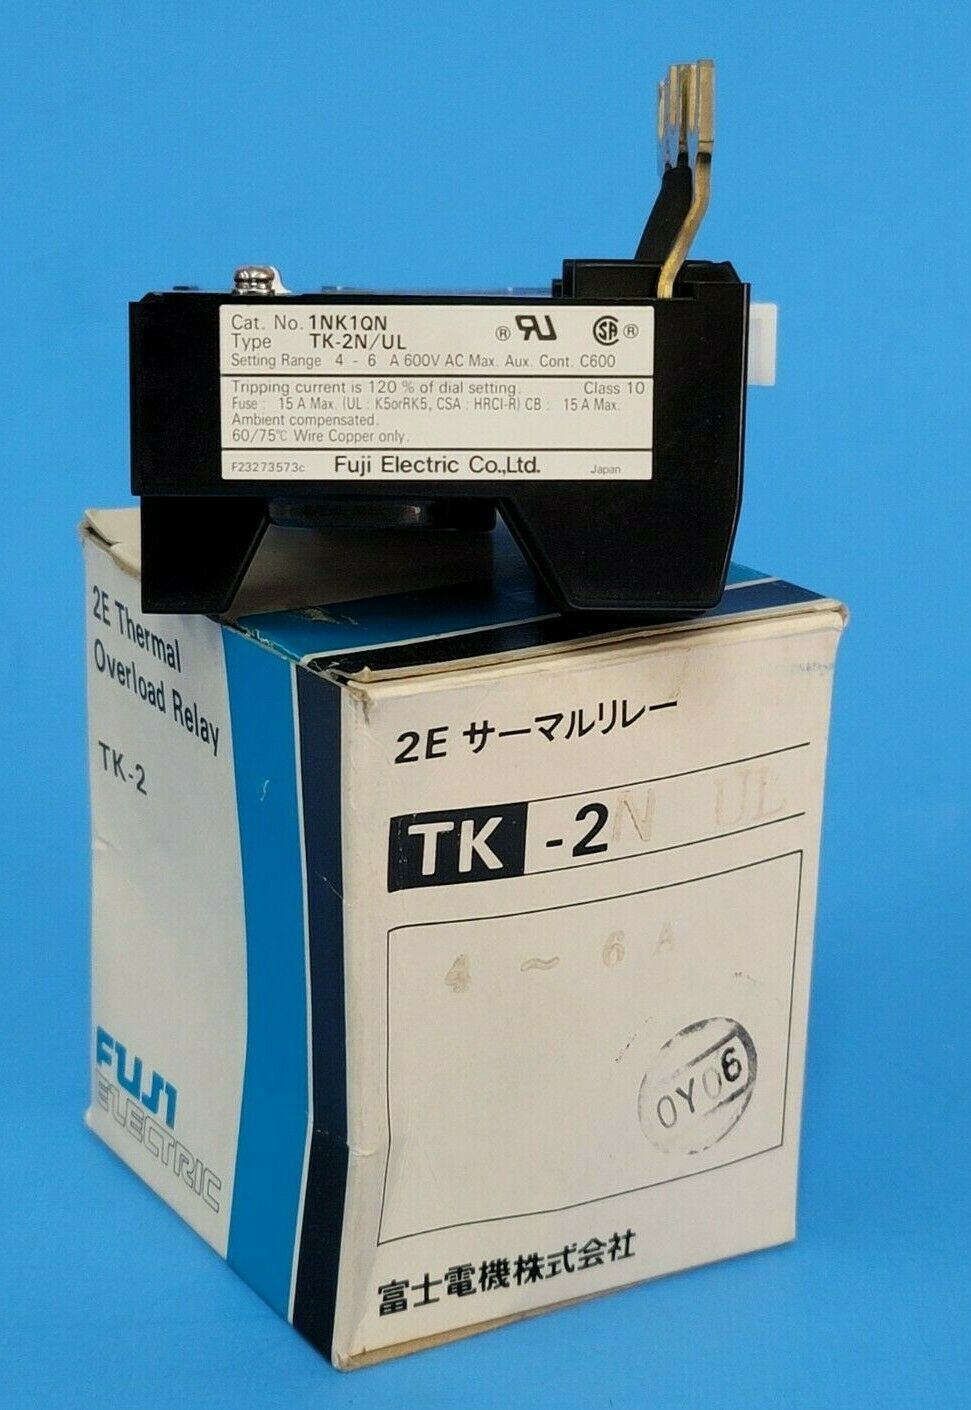 NIB FUJI ELECTRIC TK-2N/UL 2E THERMAL OVERLOAD RELAY TK-2 1NK1QN 4~6A - $25.95